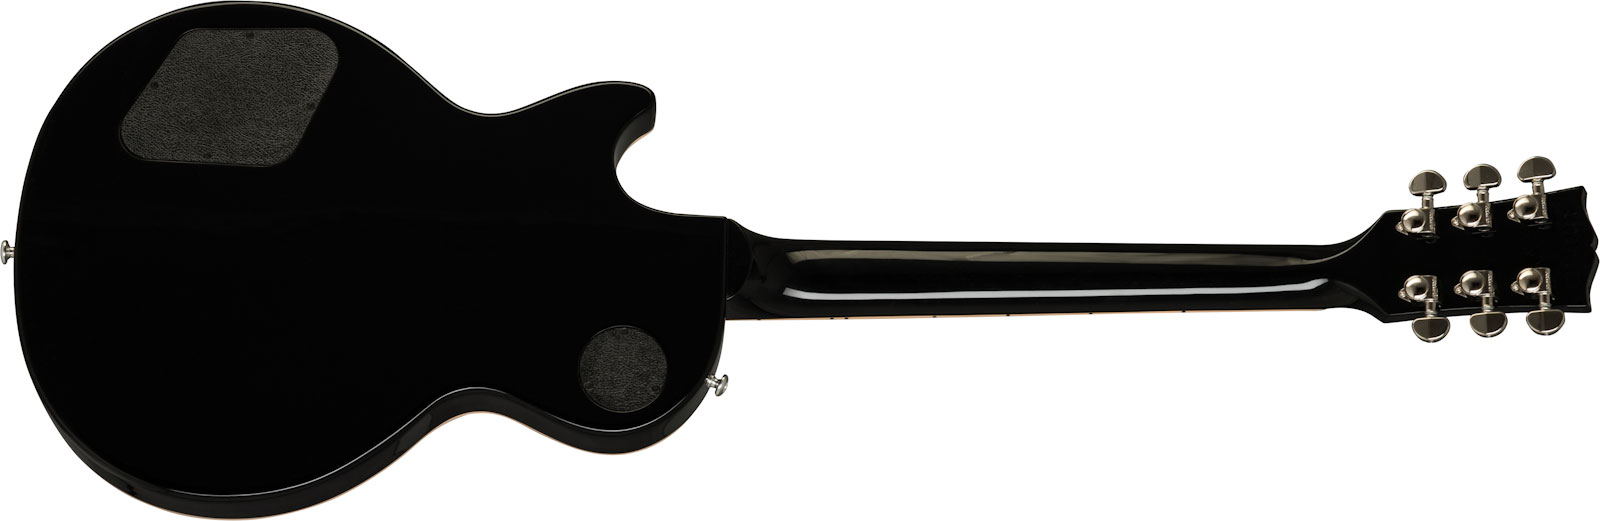 Gibson Les Paul Classic Modern Gaucher 2h Ht Rw - Ebony - Left-handed electric guitar - Variation 1